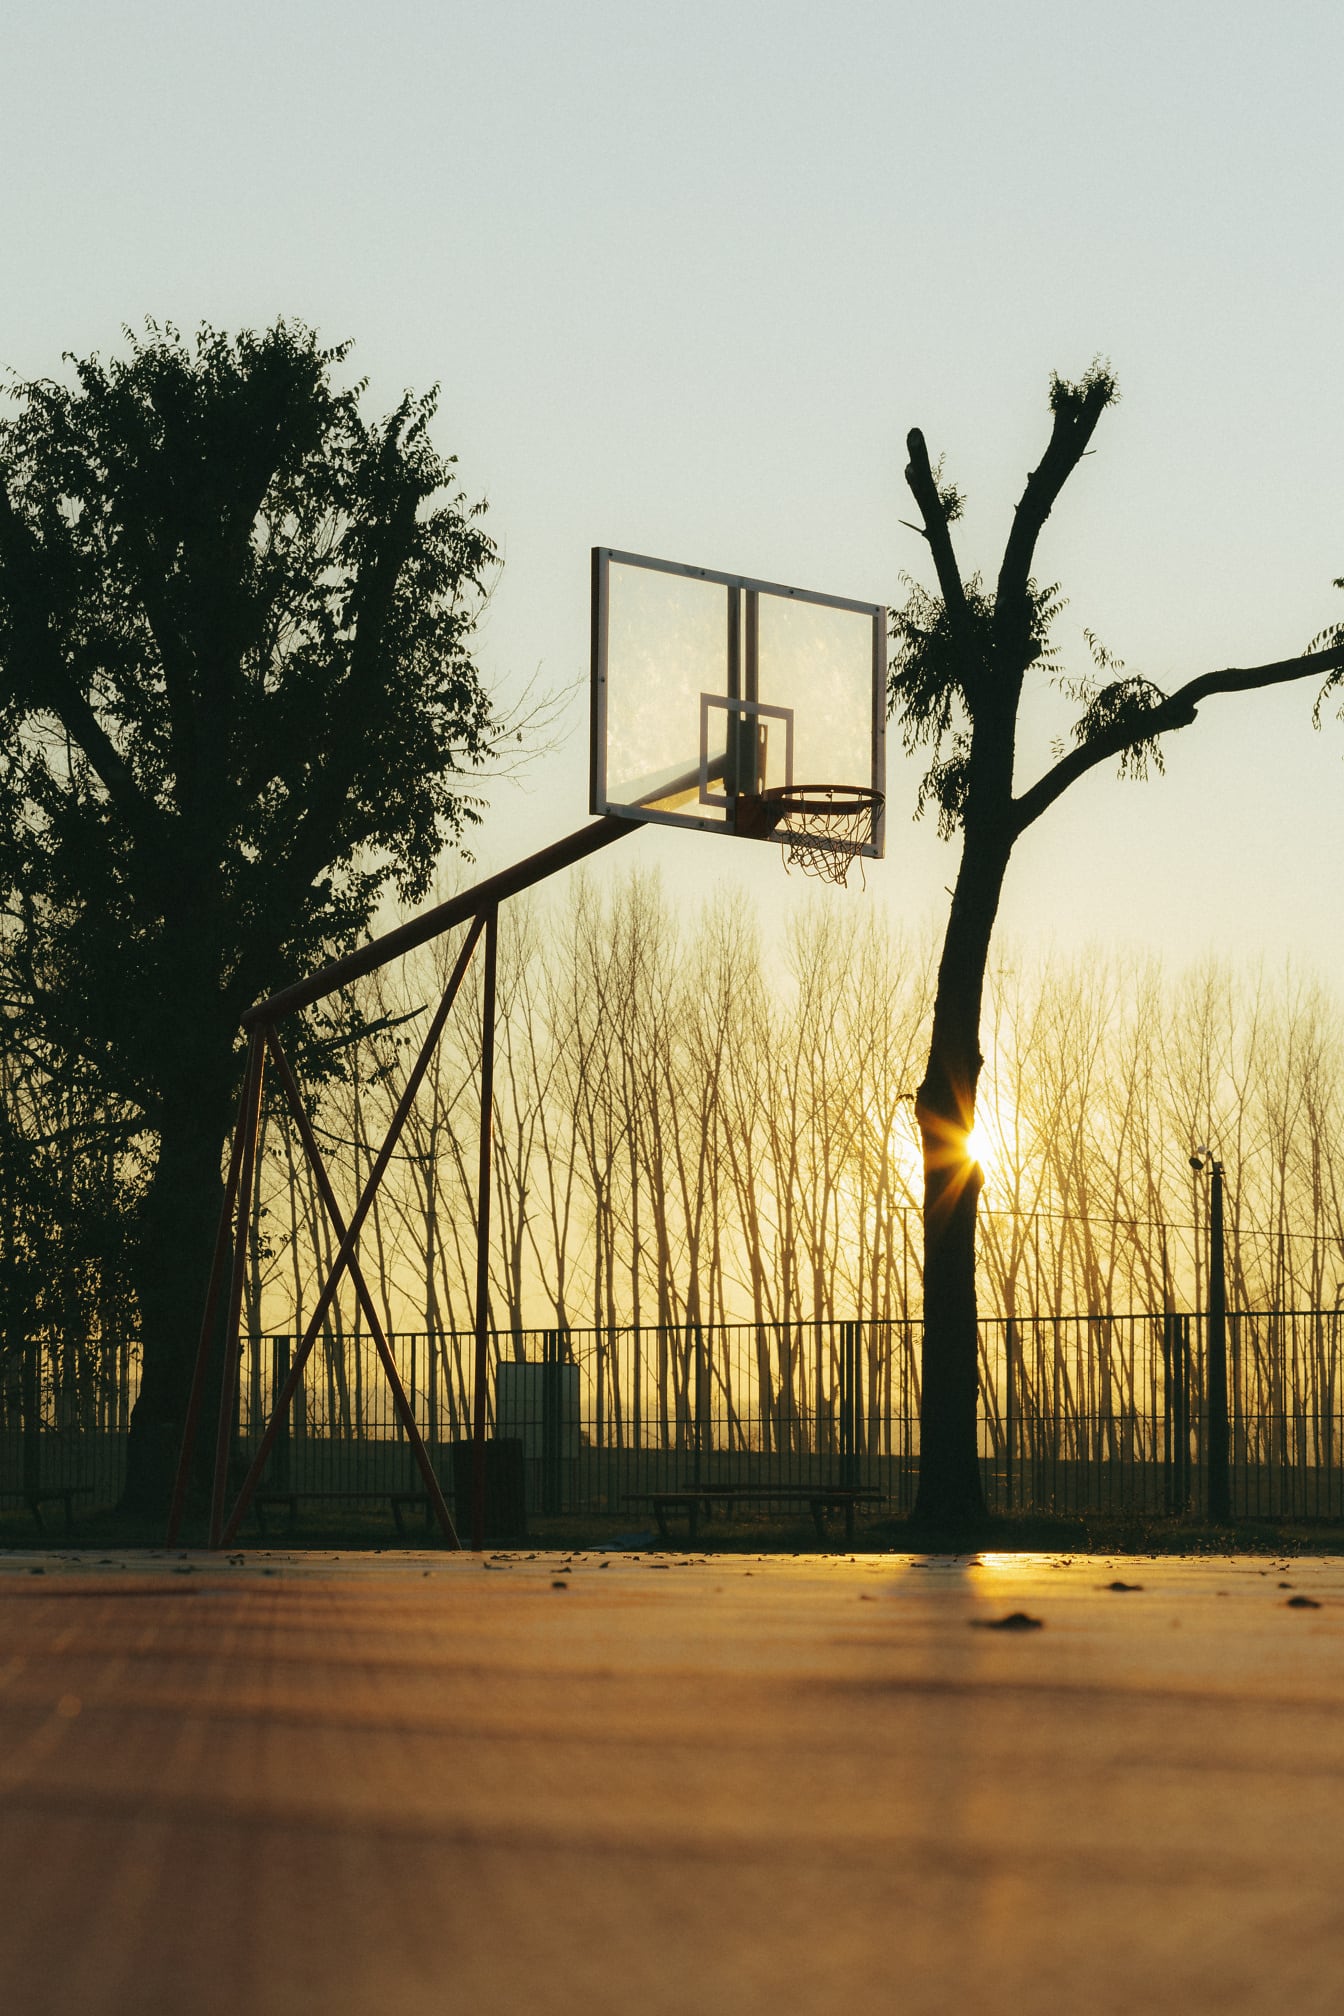 Tom basketballbane med træer og solnedgang